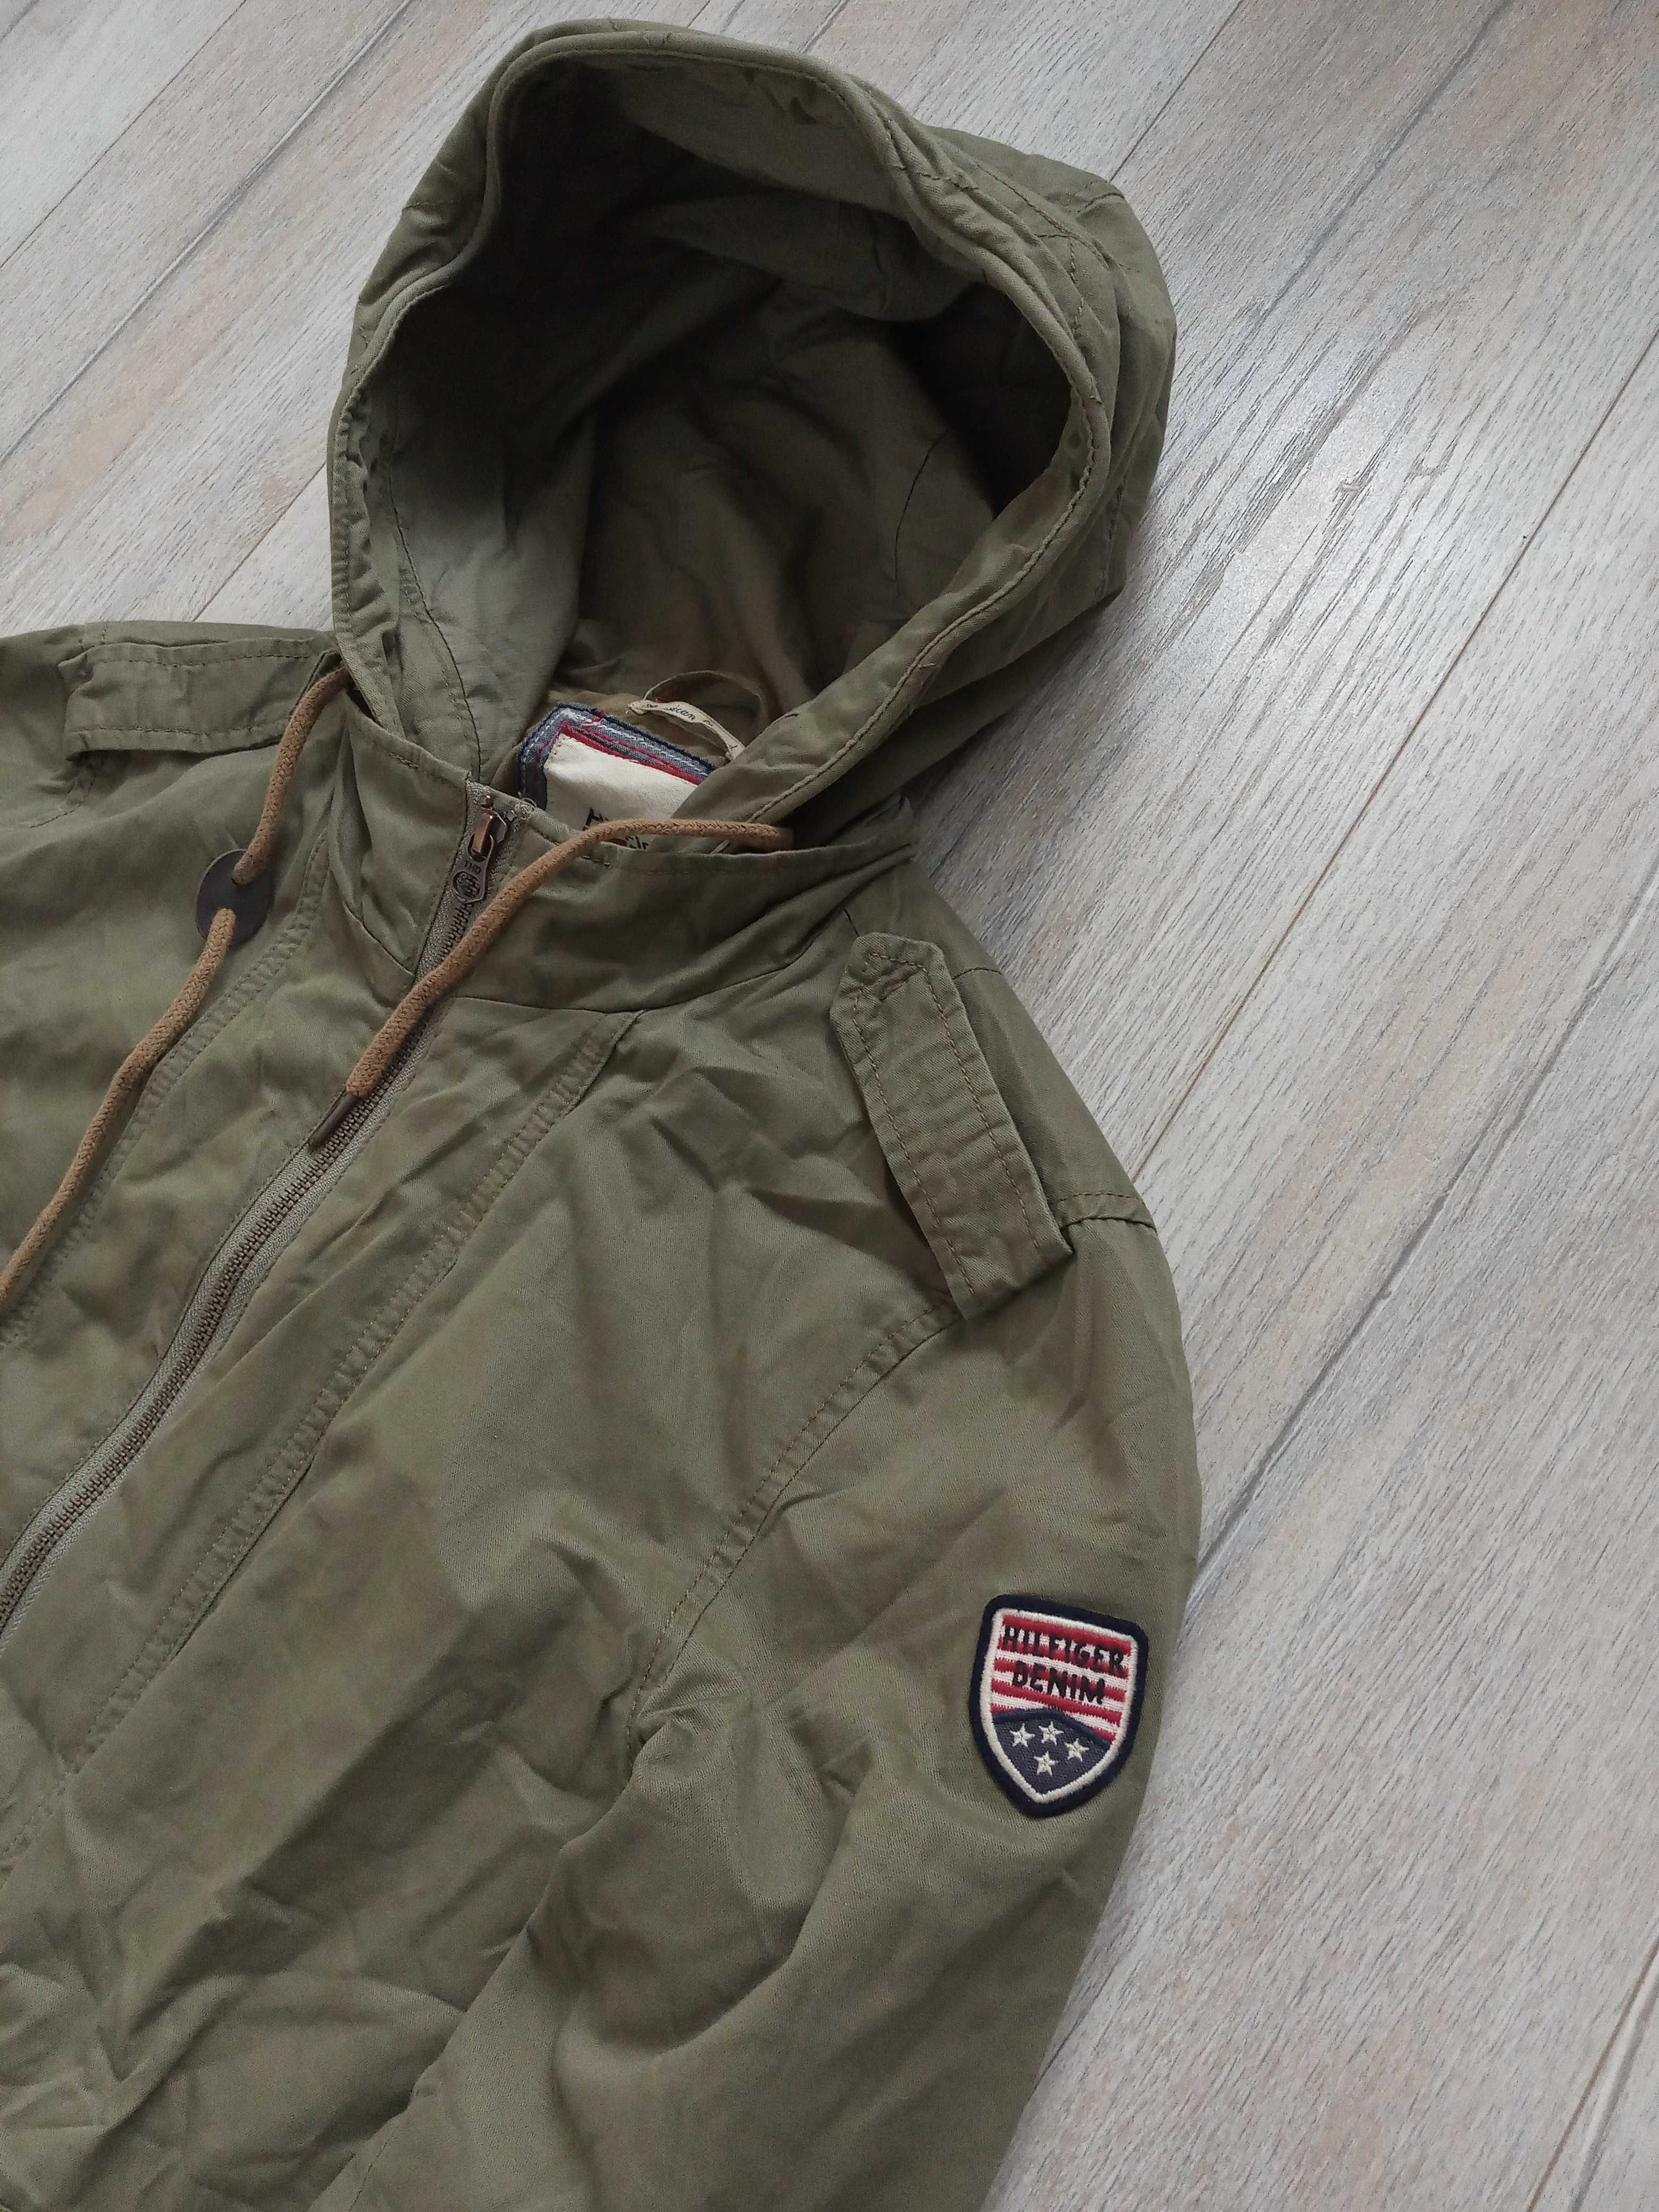 Куртка Tommy Hilfiger military jacket S-M размер